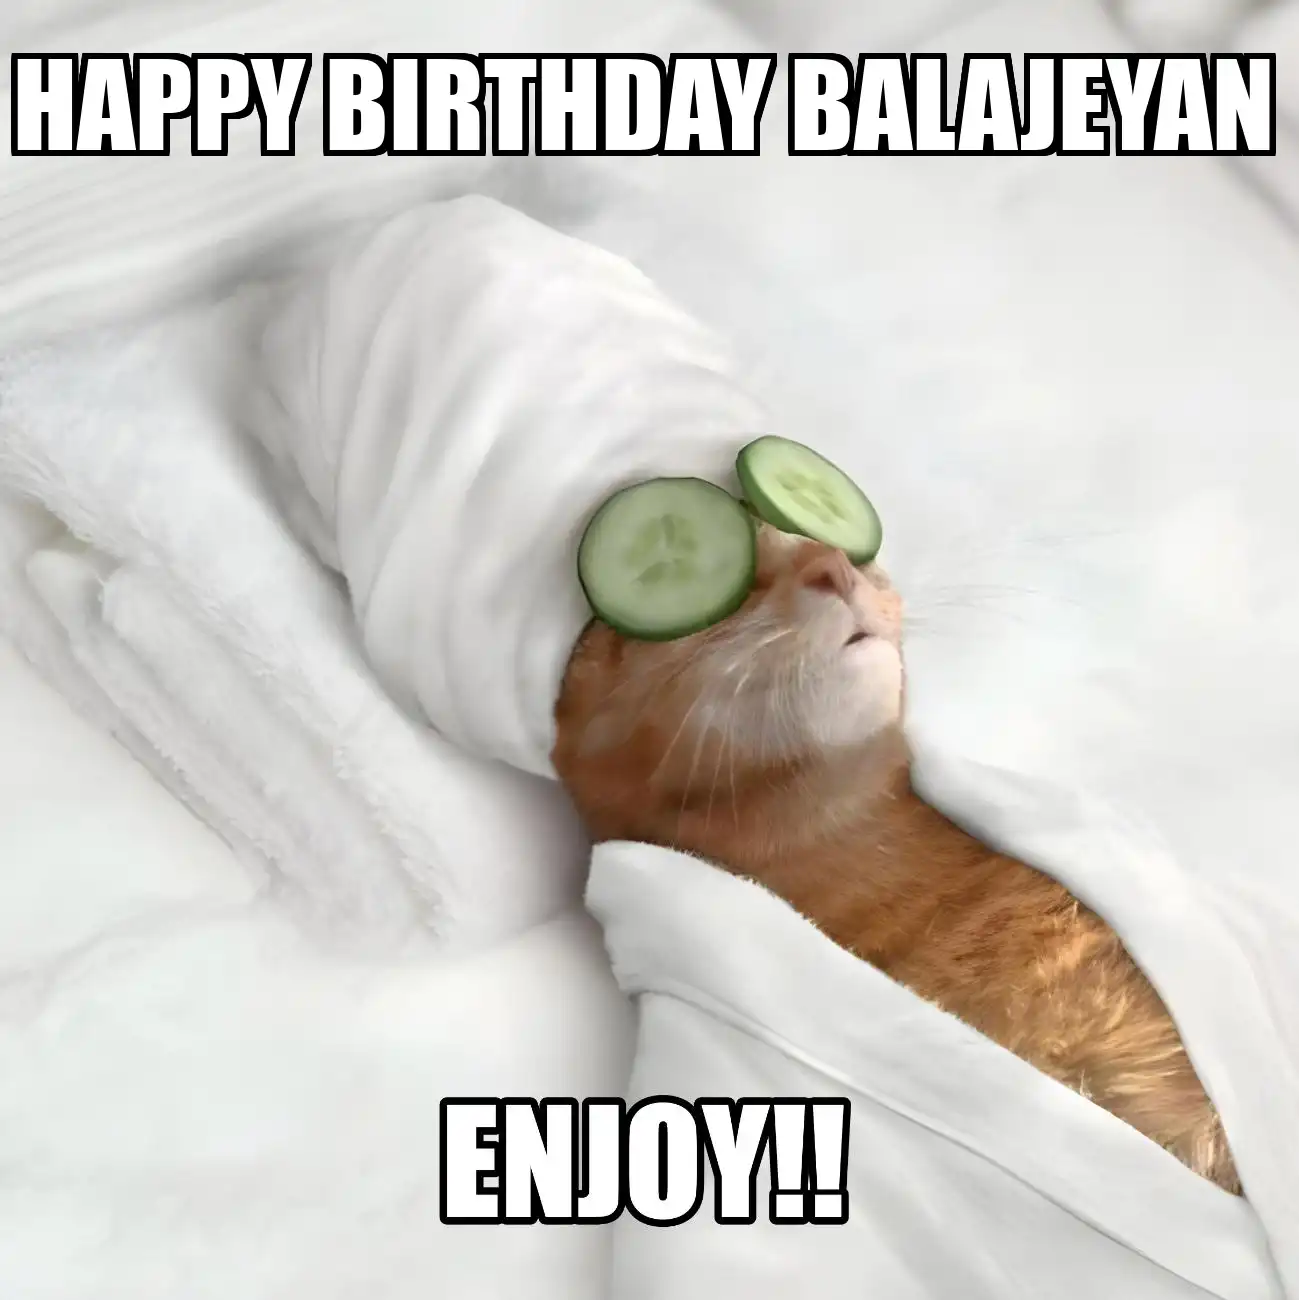 Happy Birthday Balajeyan Enjoy Cat Meme